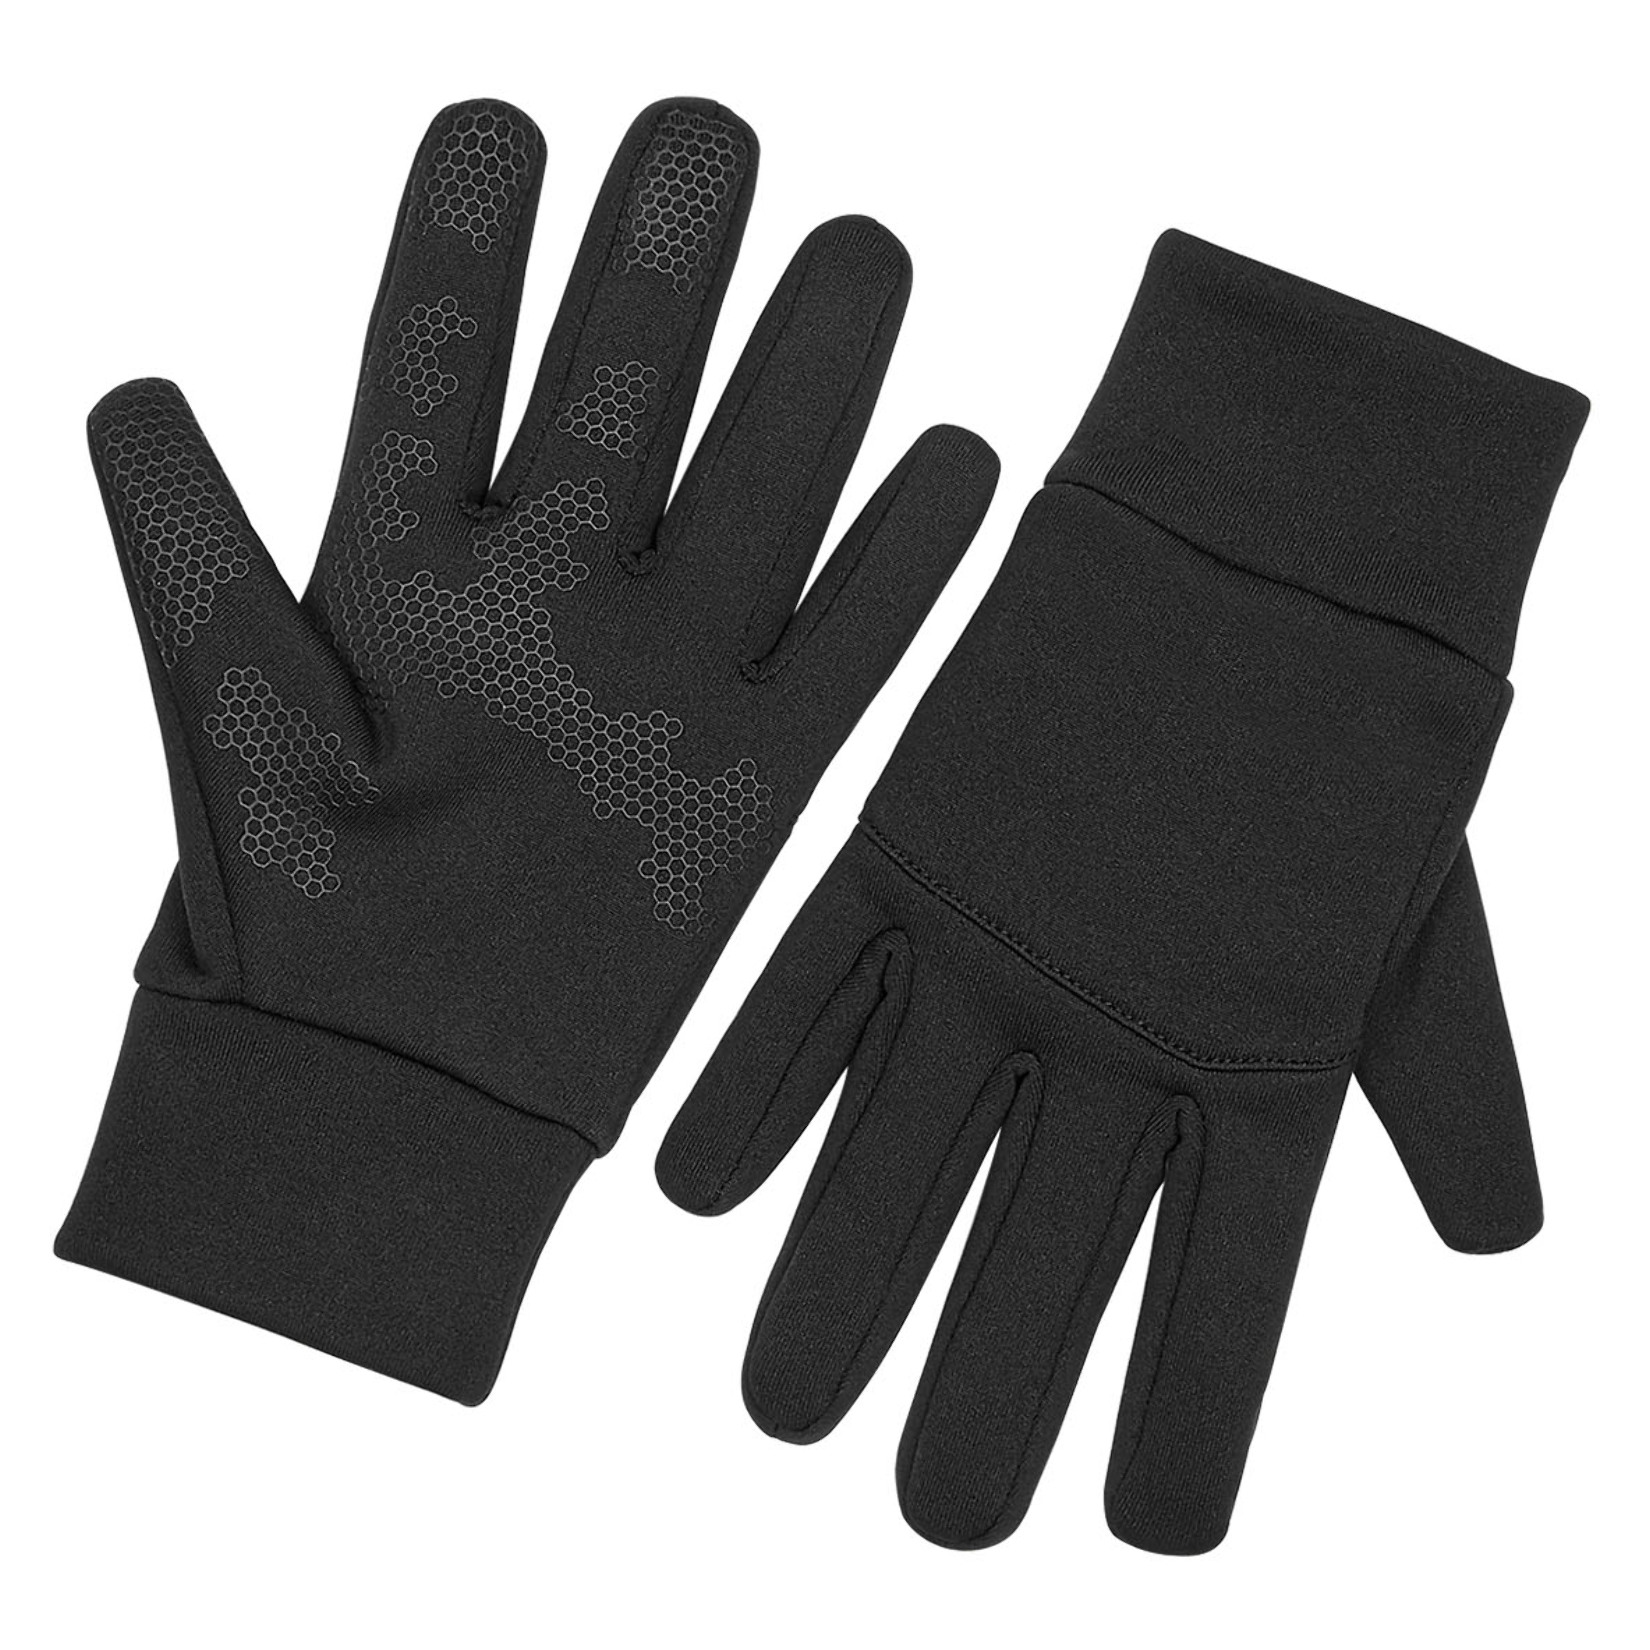 Softshell Sports Tech Gloves Black